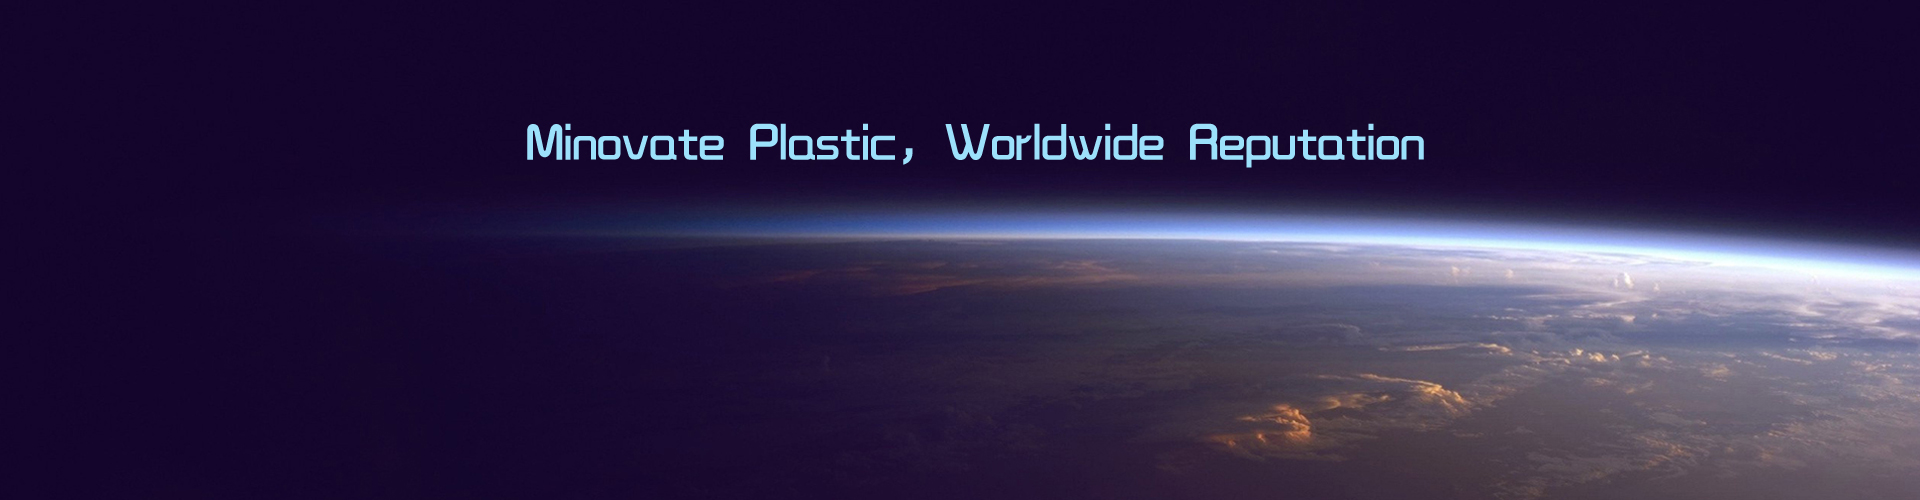 Minovate Plastic, Worldwide Reputation